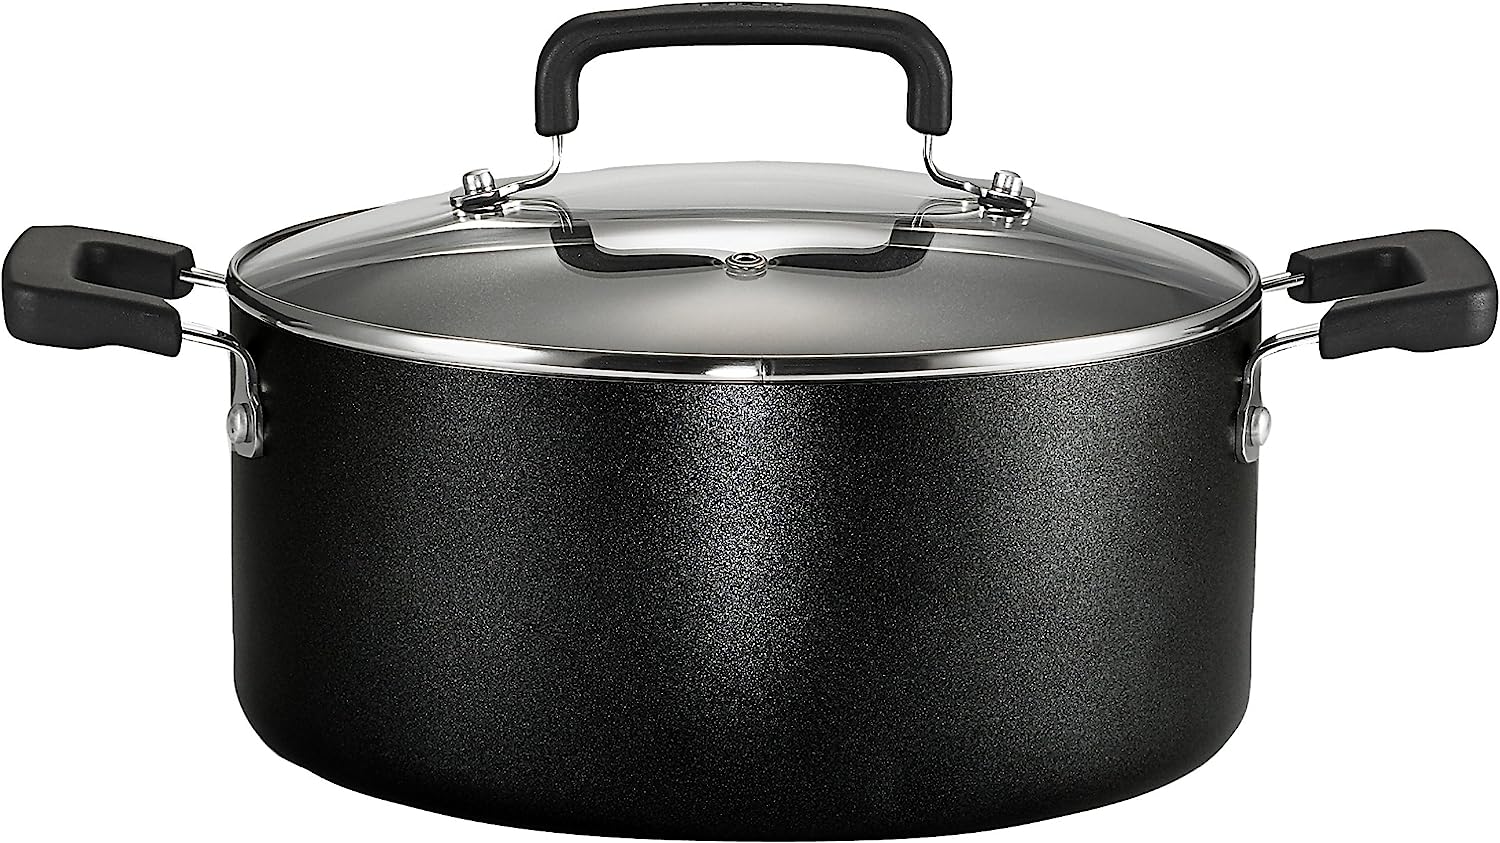 T-fal t-fal signature nonstick cookware set 12 piece pots and pans,  dishwasher safe black